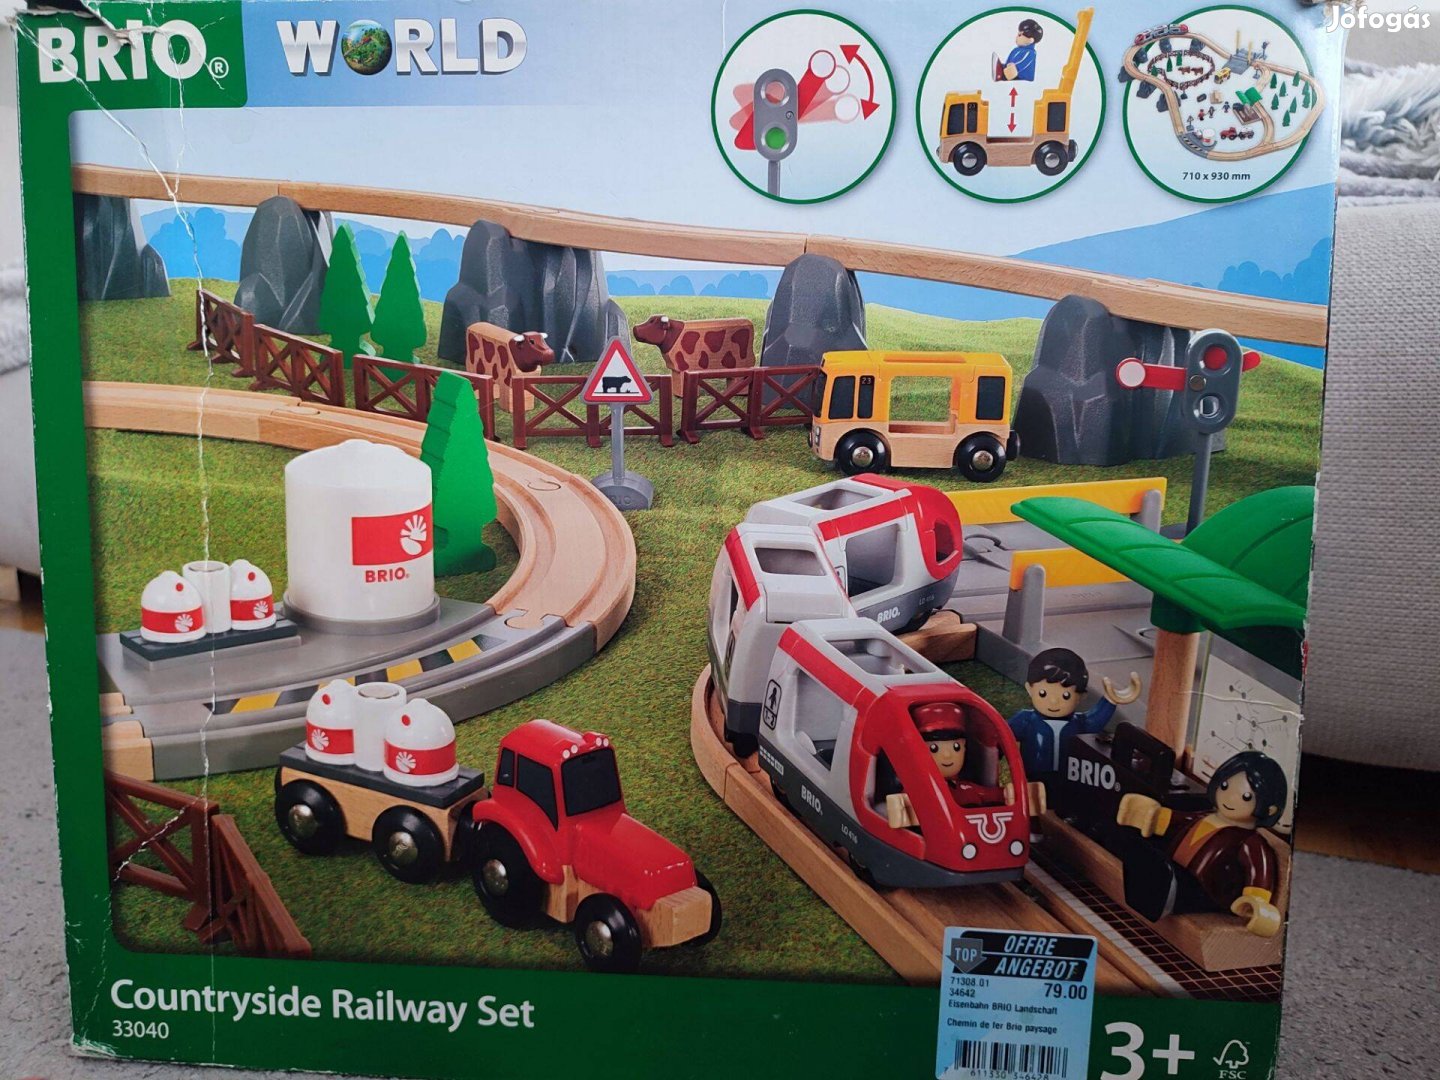 Brio Countryside Railway set